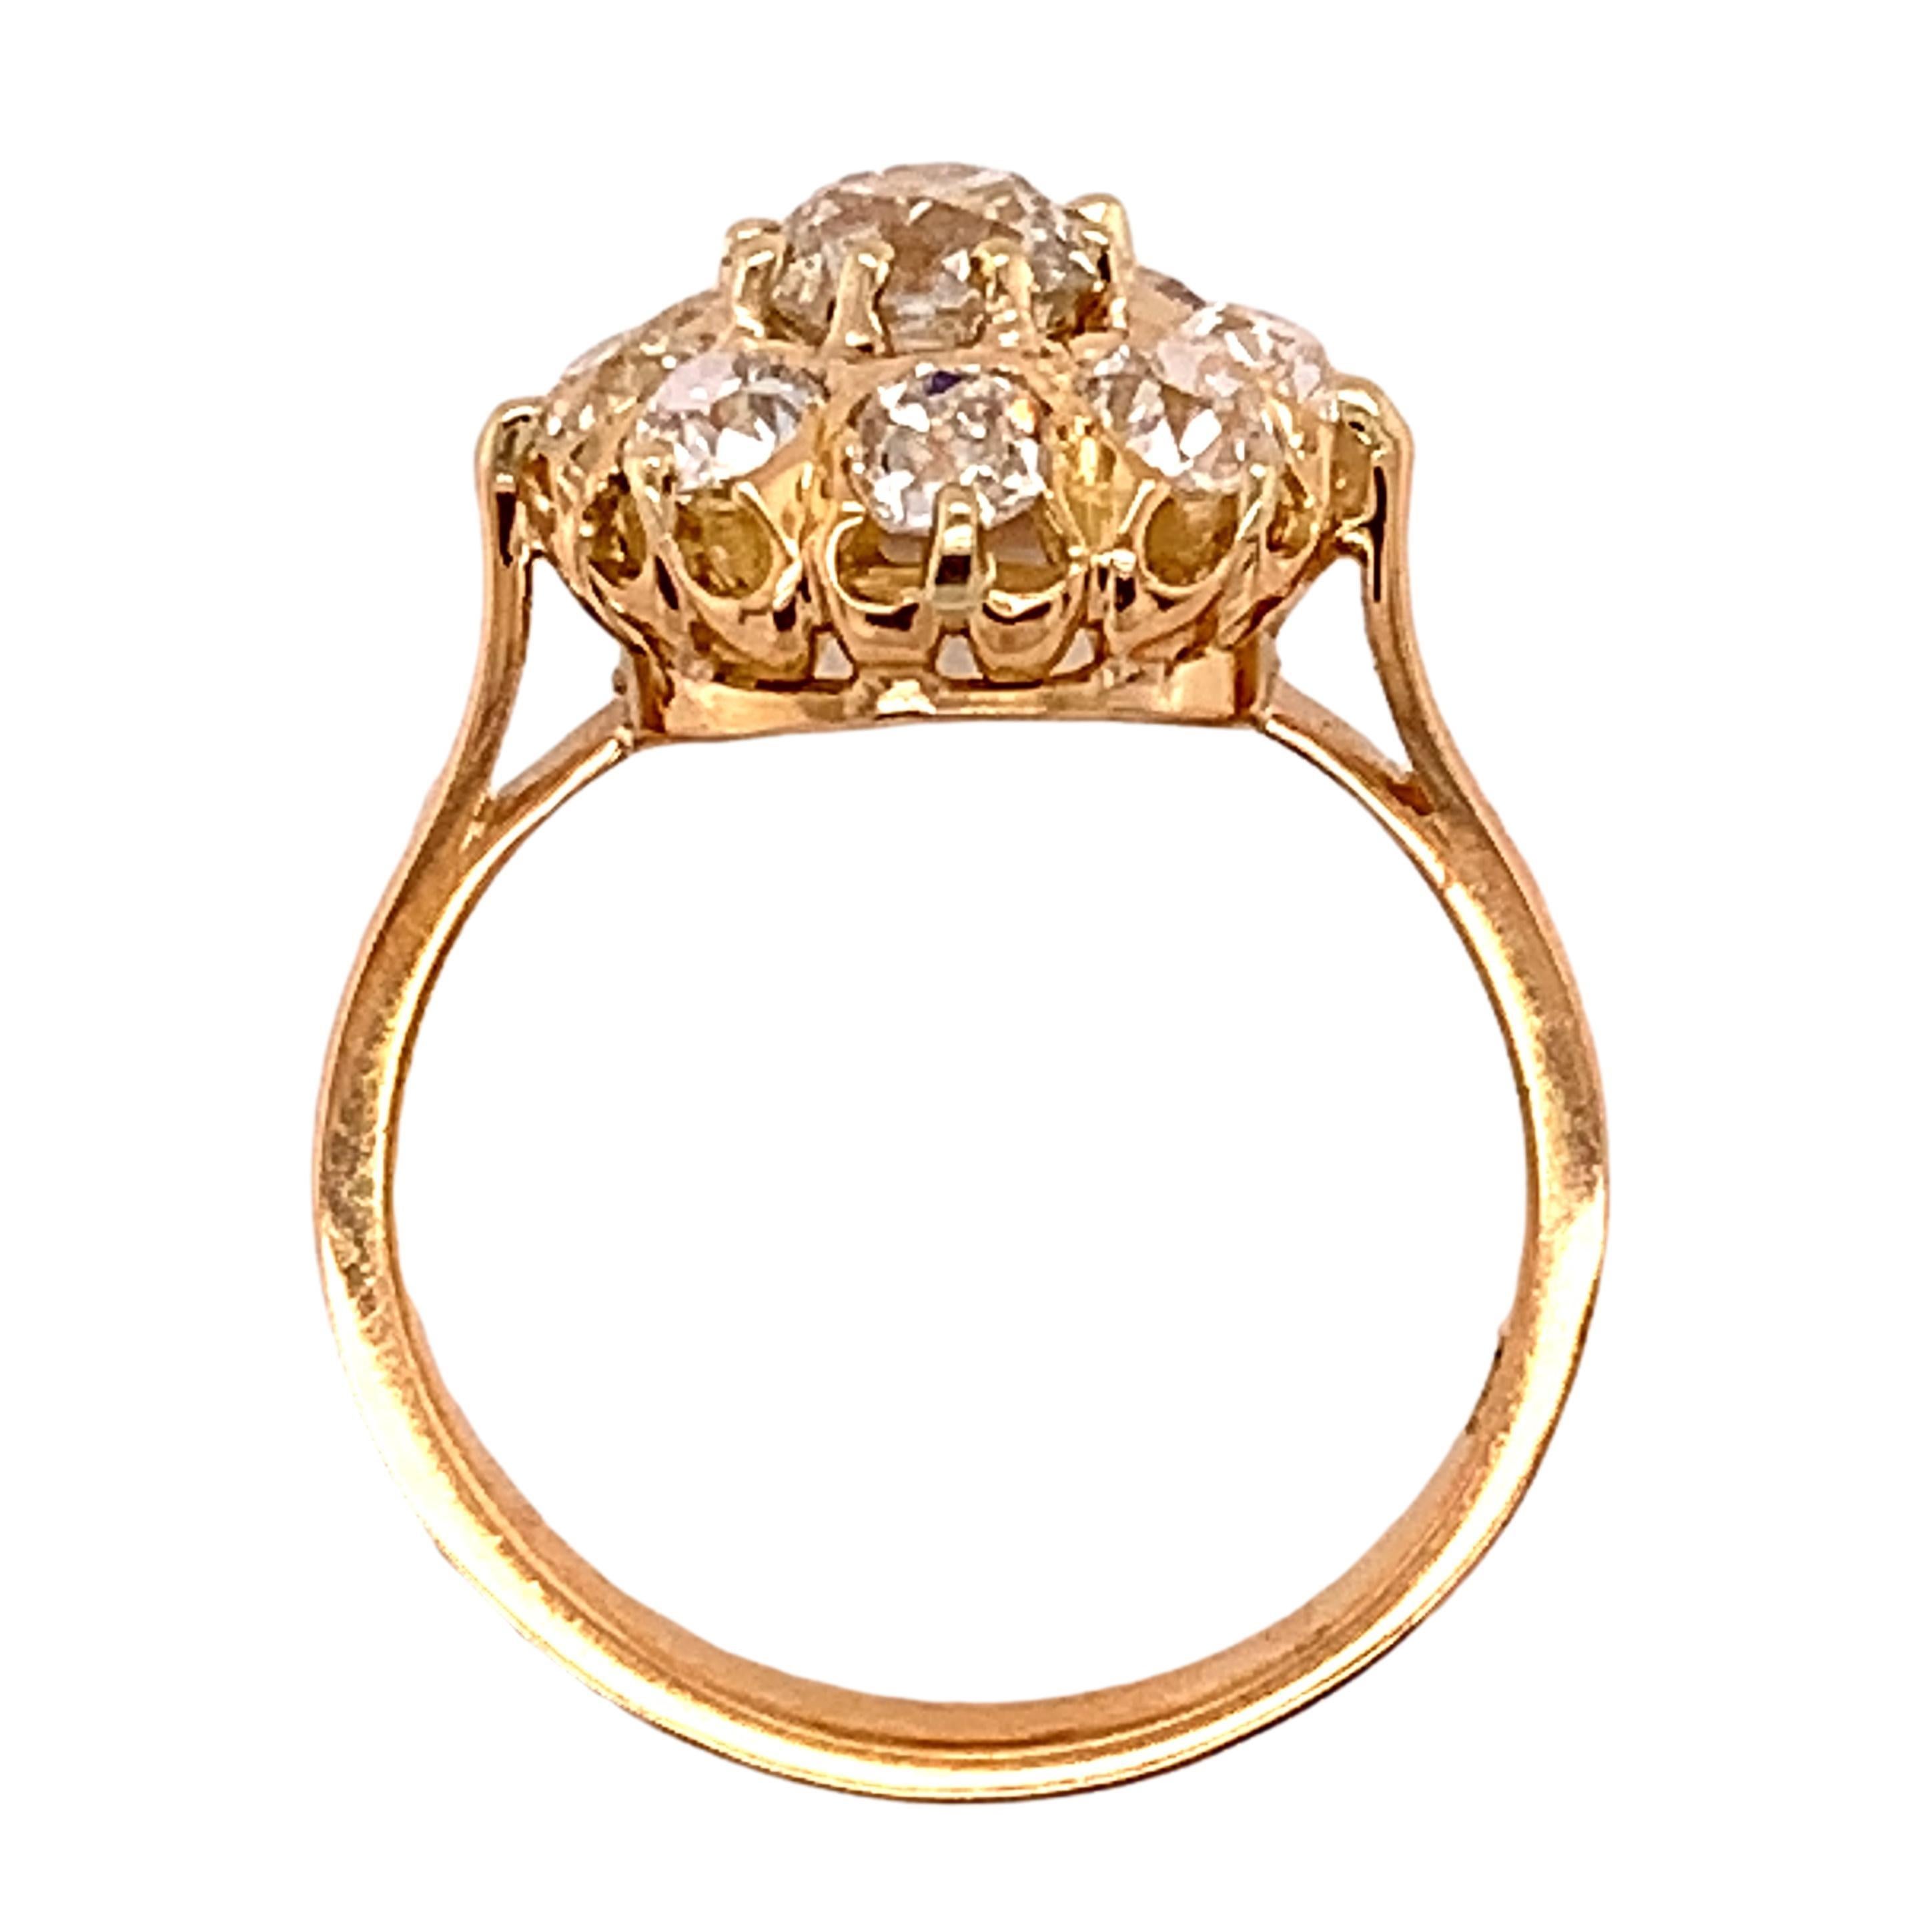 Women's or Men's 18k Gold Victorian Mine Cut Genuine Natural Diamond Ring 2.48 Carats TW '#J4894'